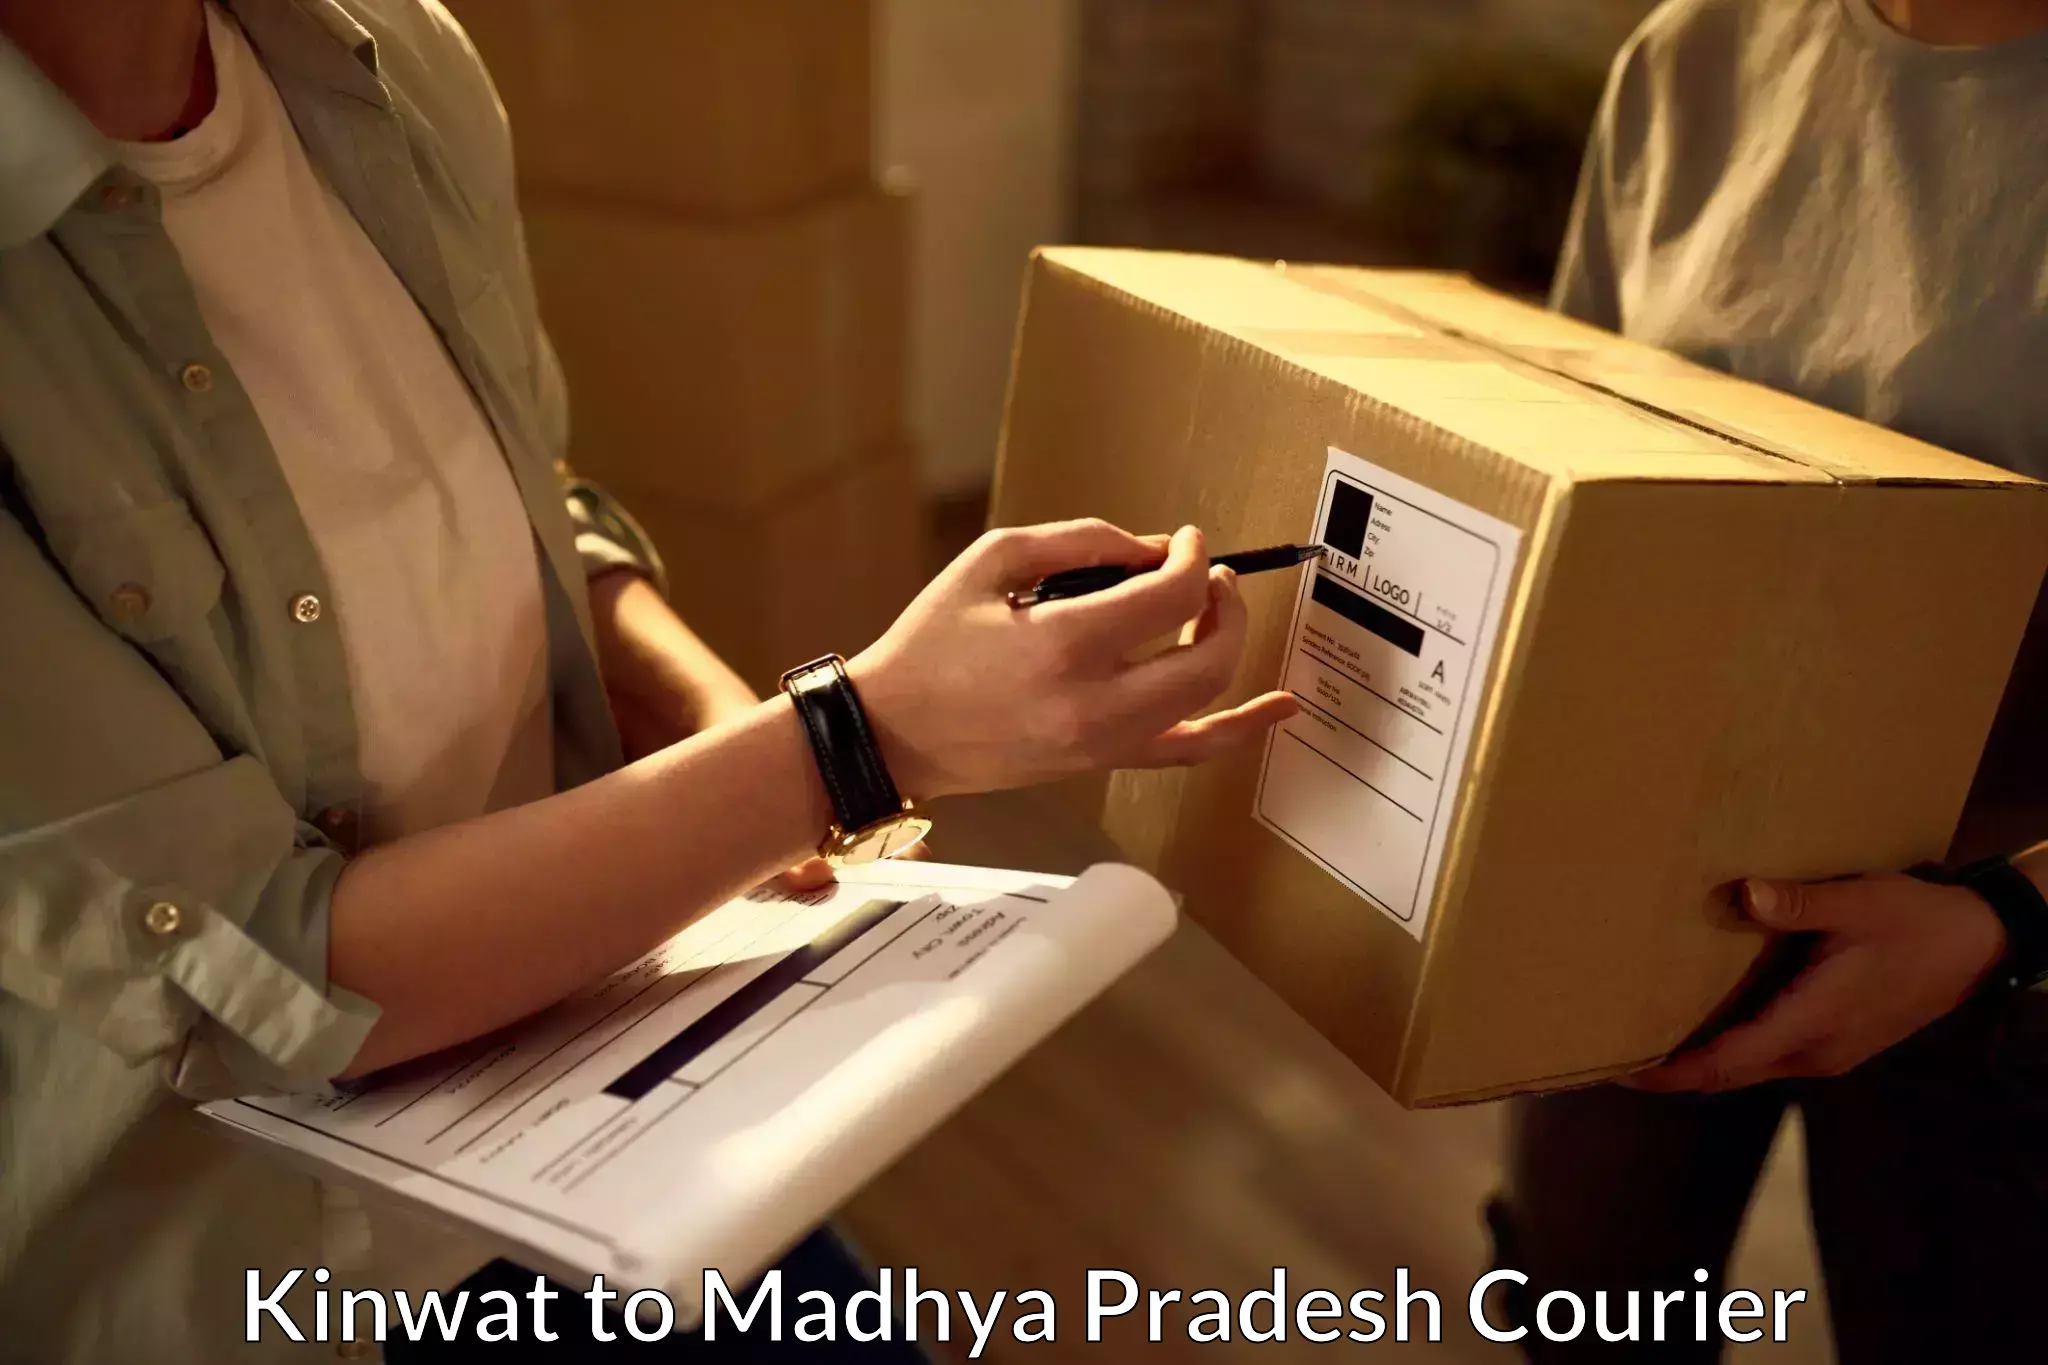 Courier service innovation Kinwat to Madhya Pradesh